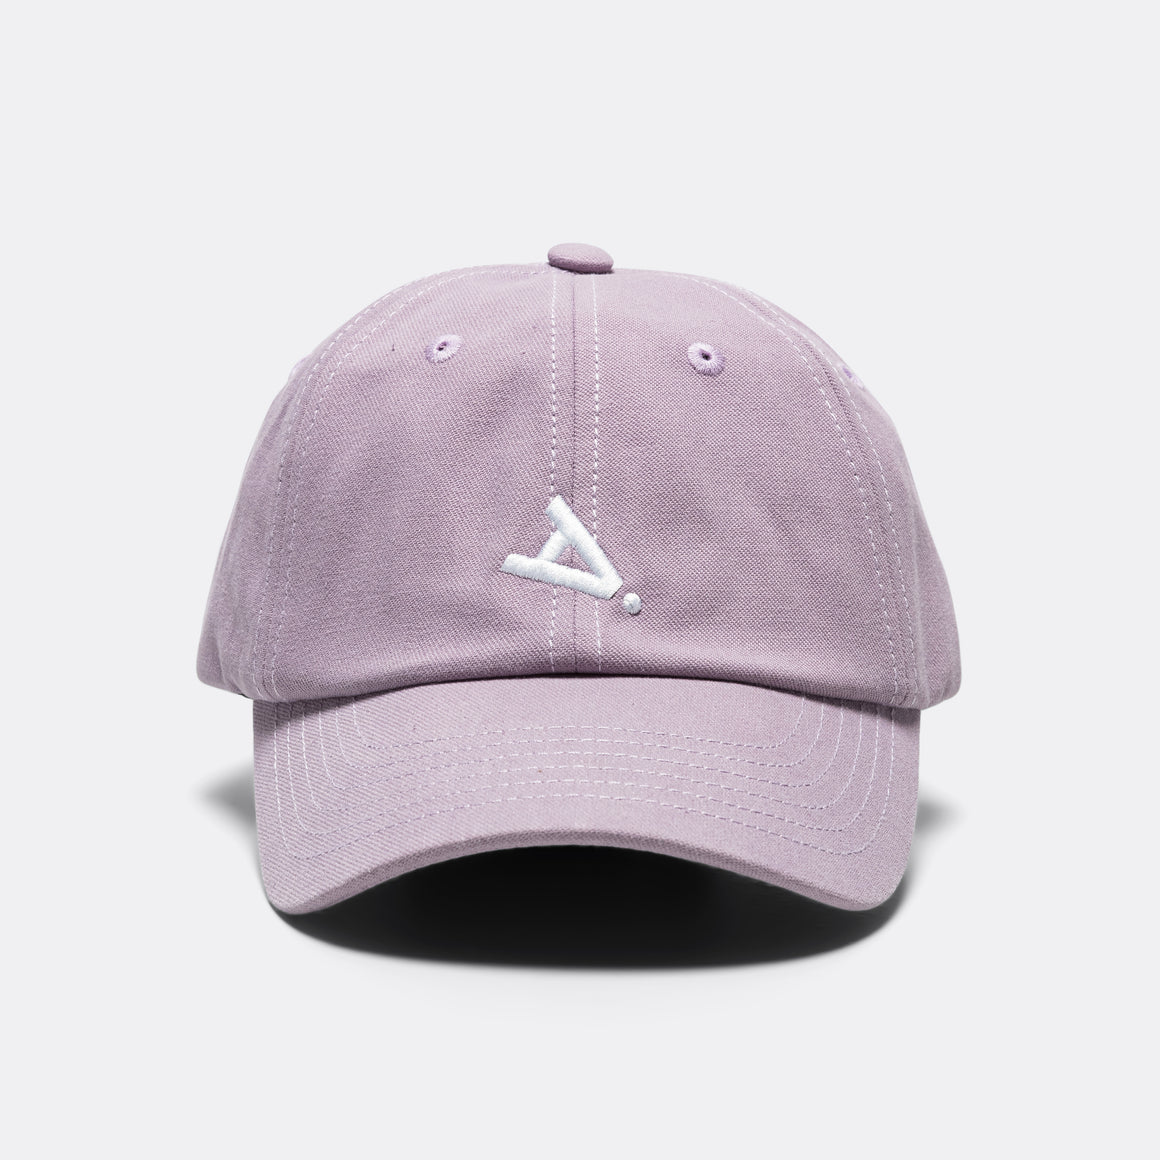 Formula-A Baseball Cap - Lavender